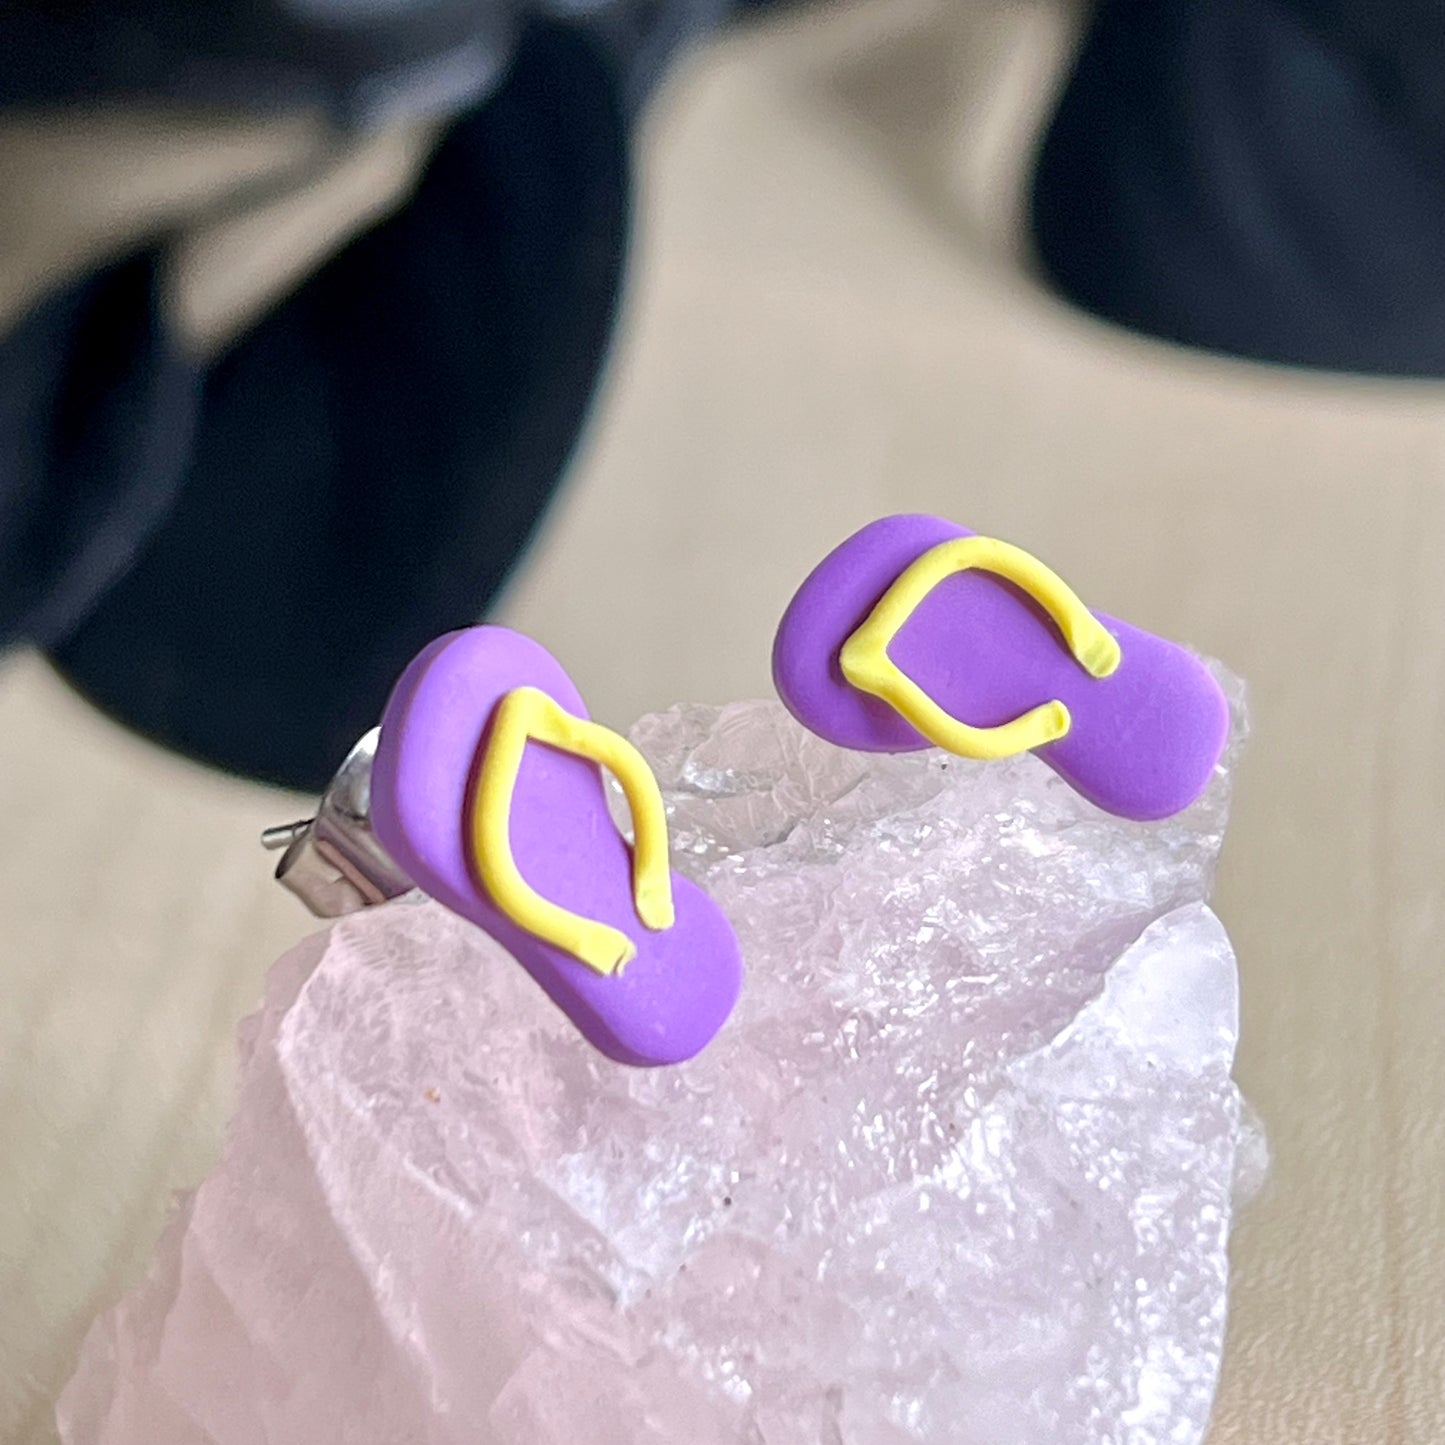 Thongs / flip flops studs, purple with yellow, handmade earrings